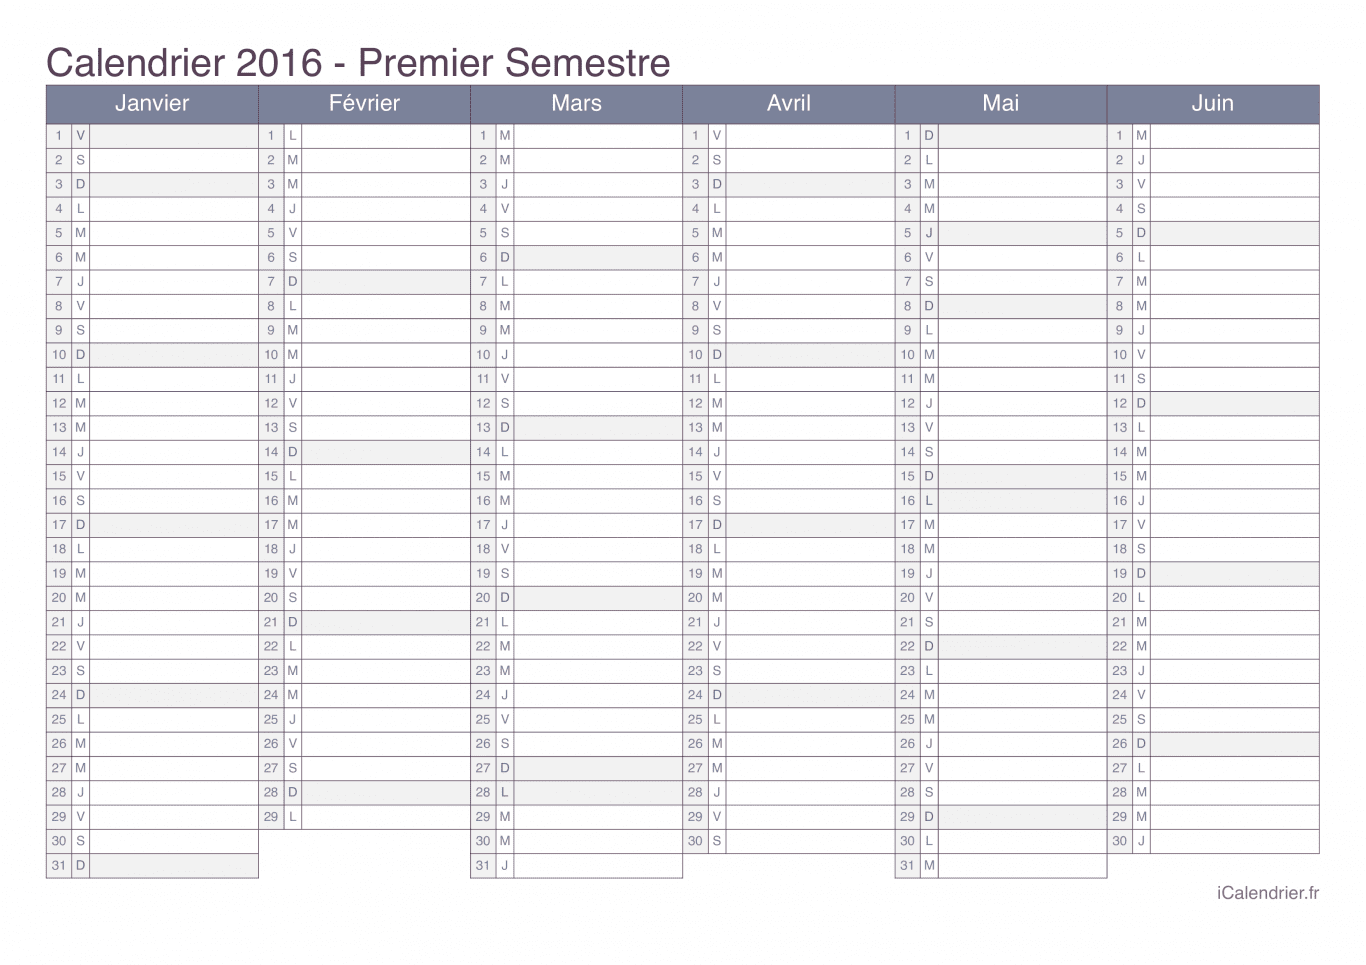 Calendrier par semestre 2016 - Office